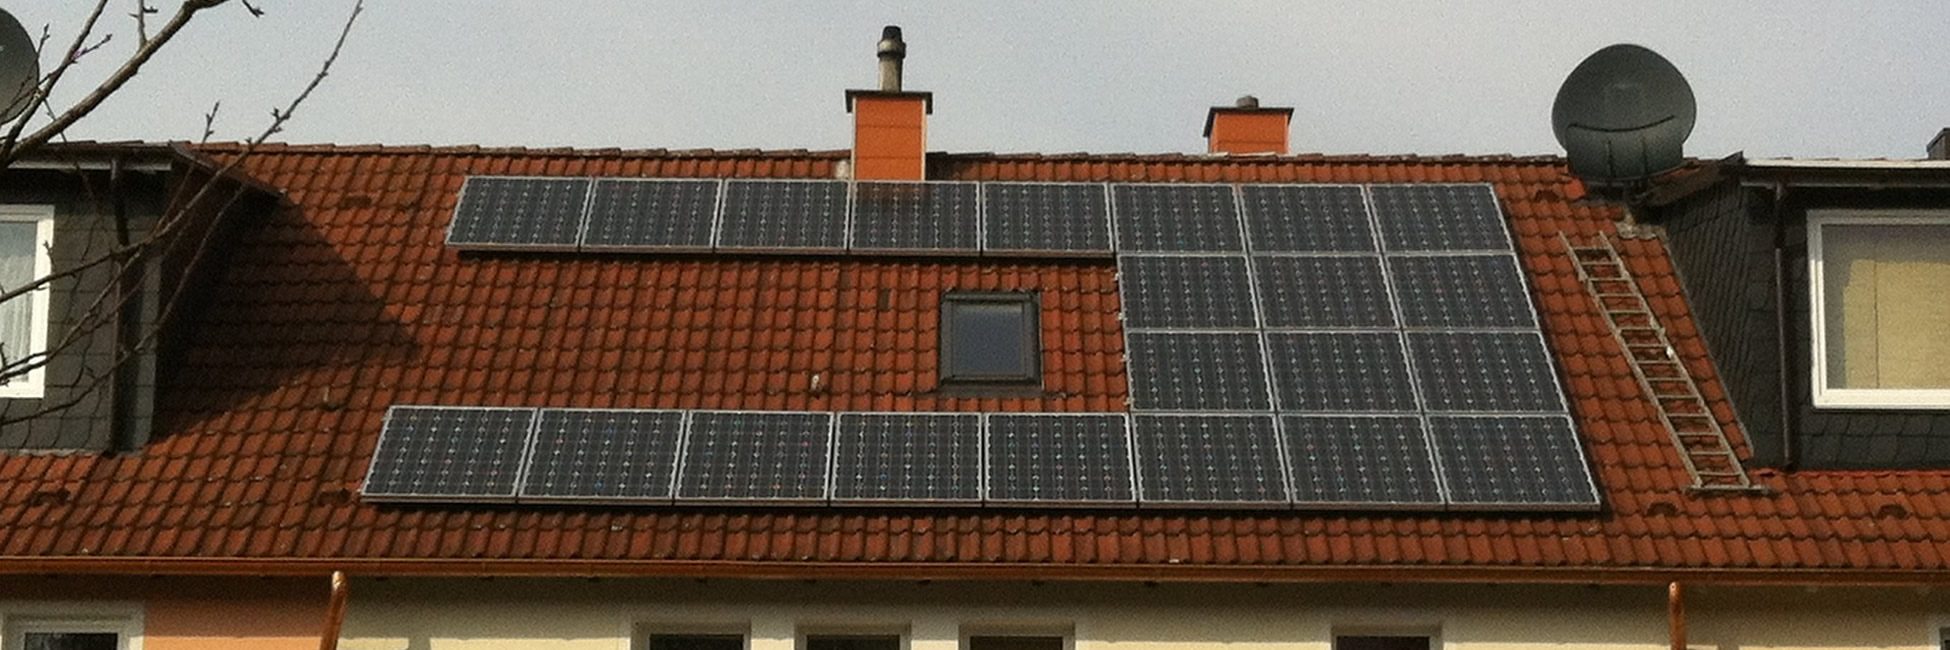 solar-modules-1634596_1920-1.jpg